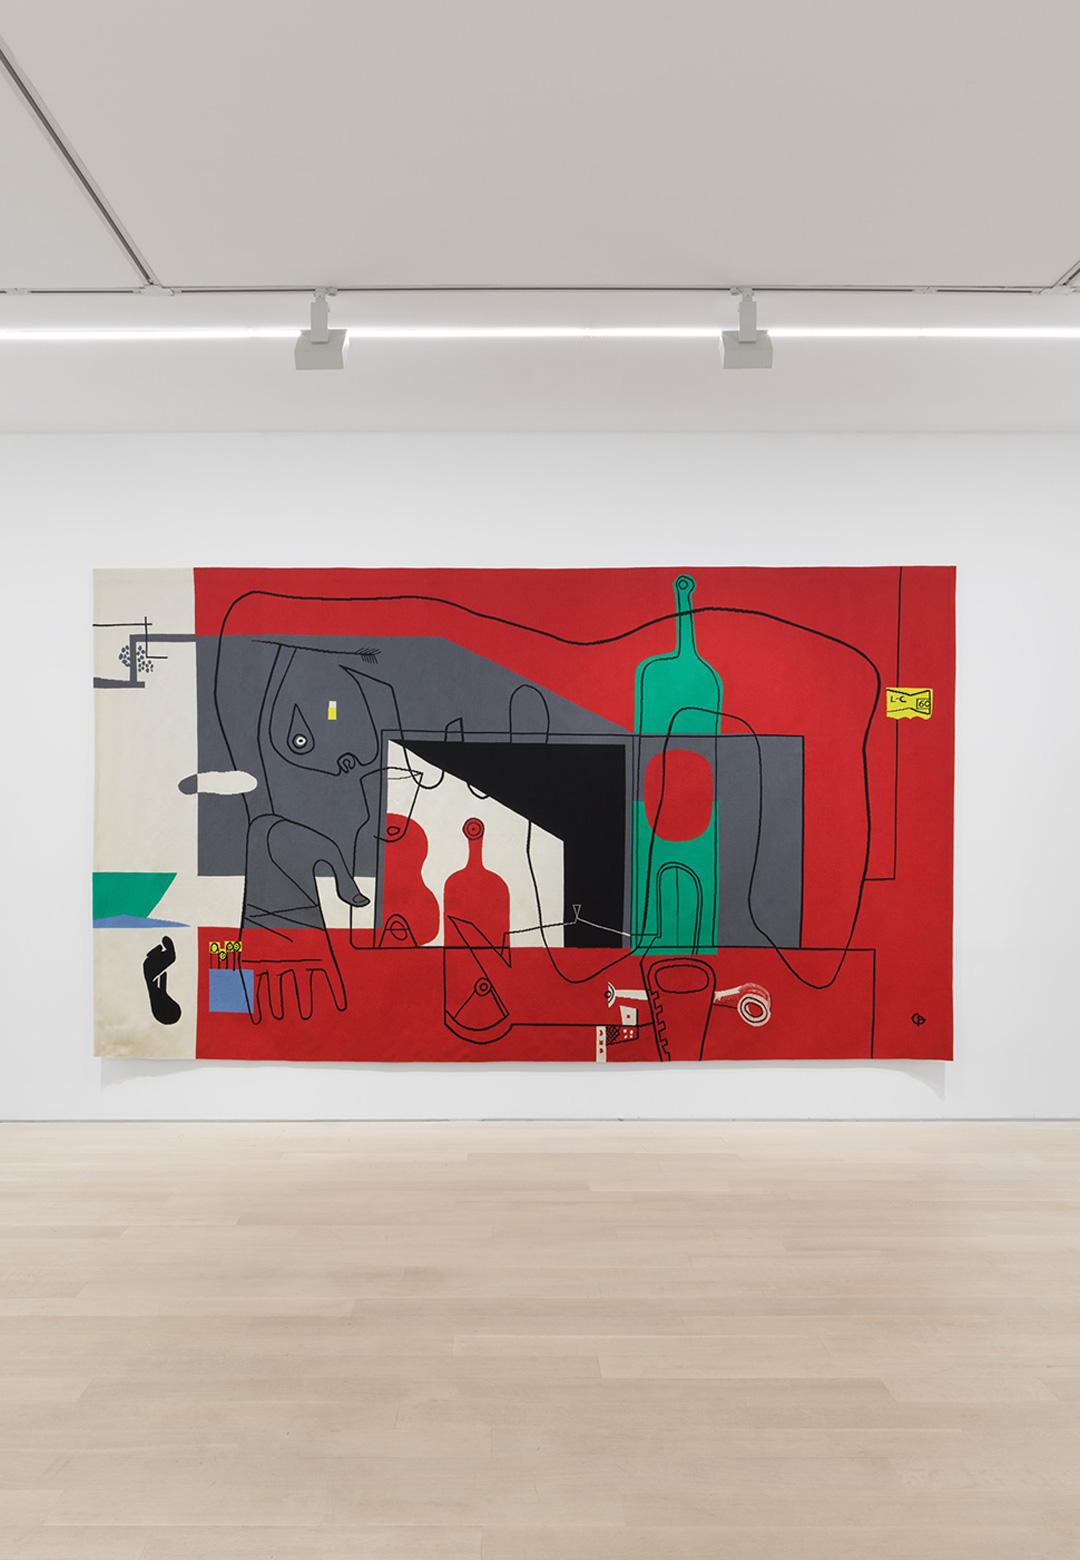 'Nomadic Murals' celebrates Le Corbusier's tapestry at Almine Rech New York